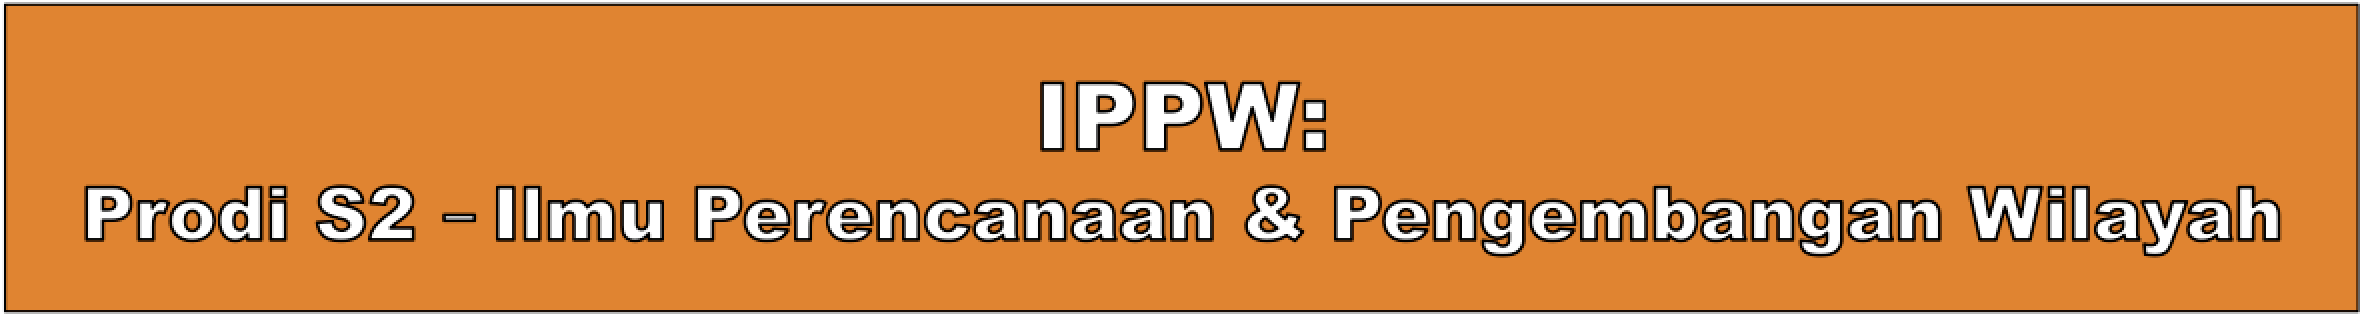 IPPW